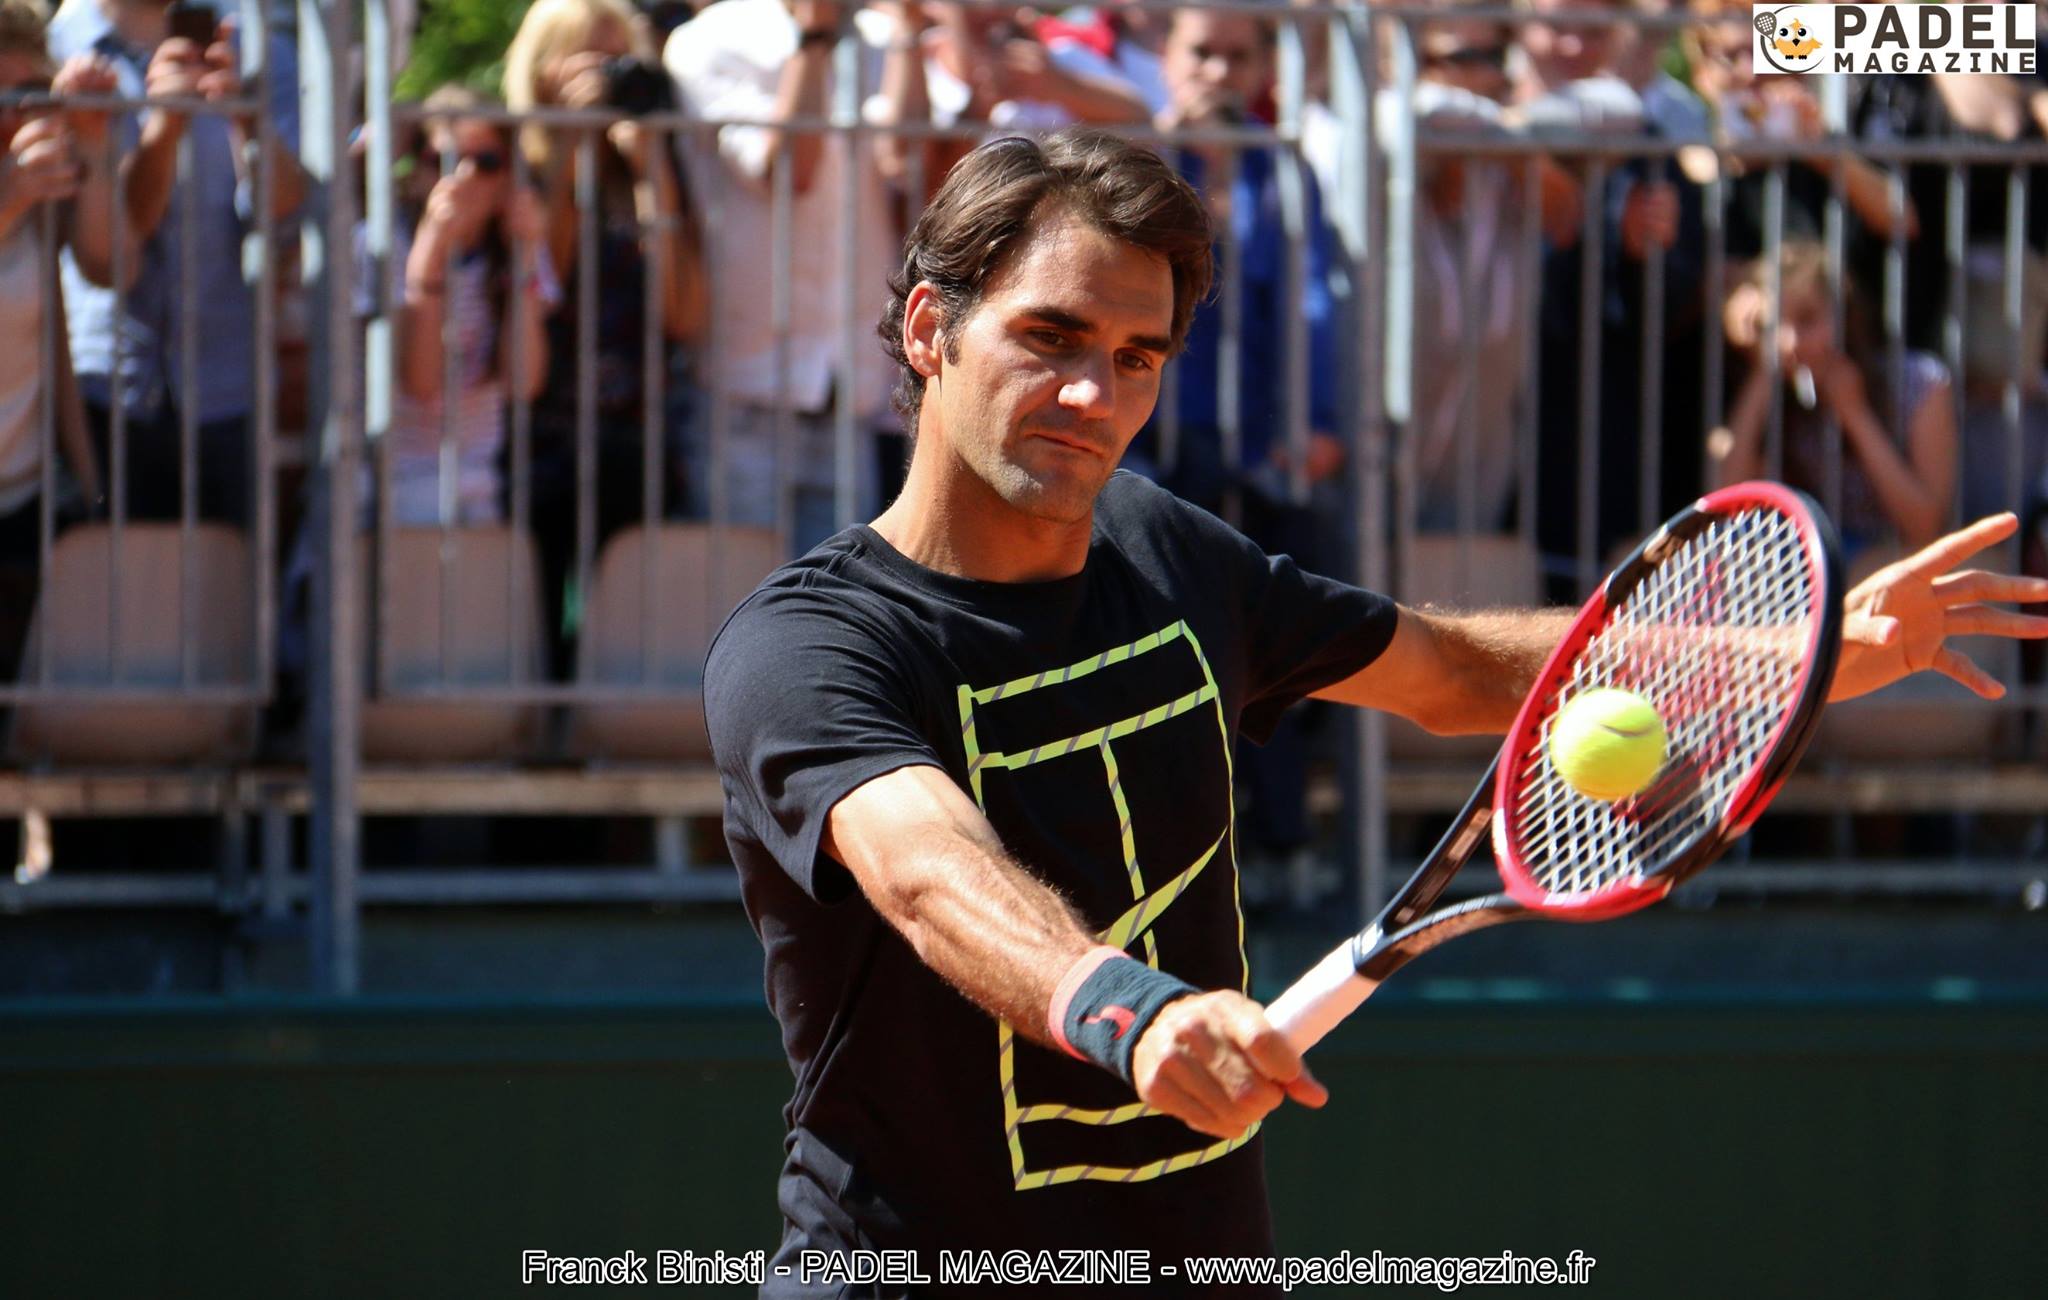 Roger Federer a padel : somni o realitat futura?